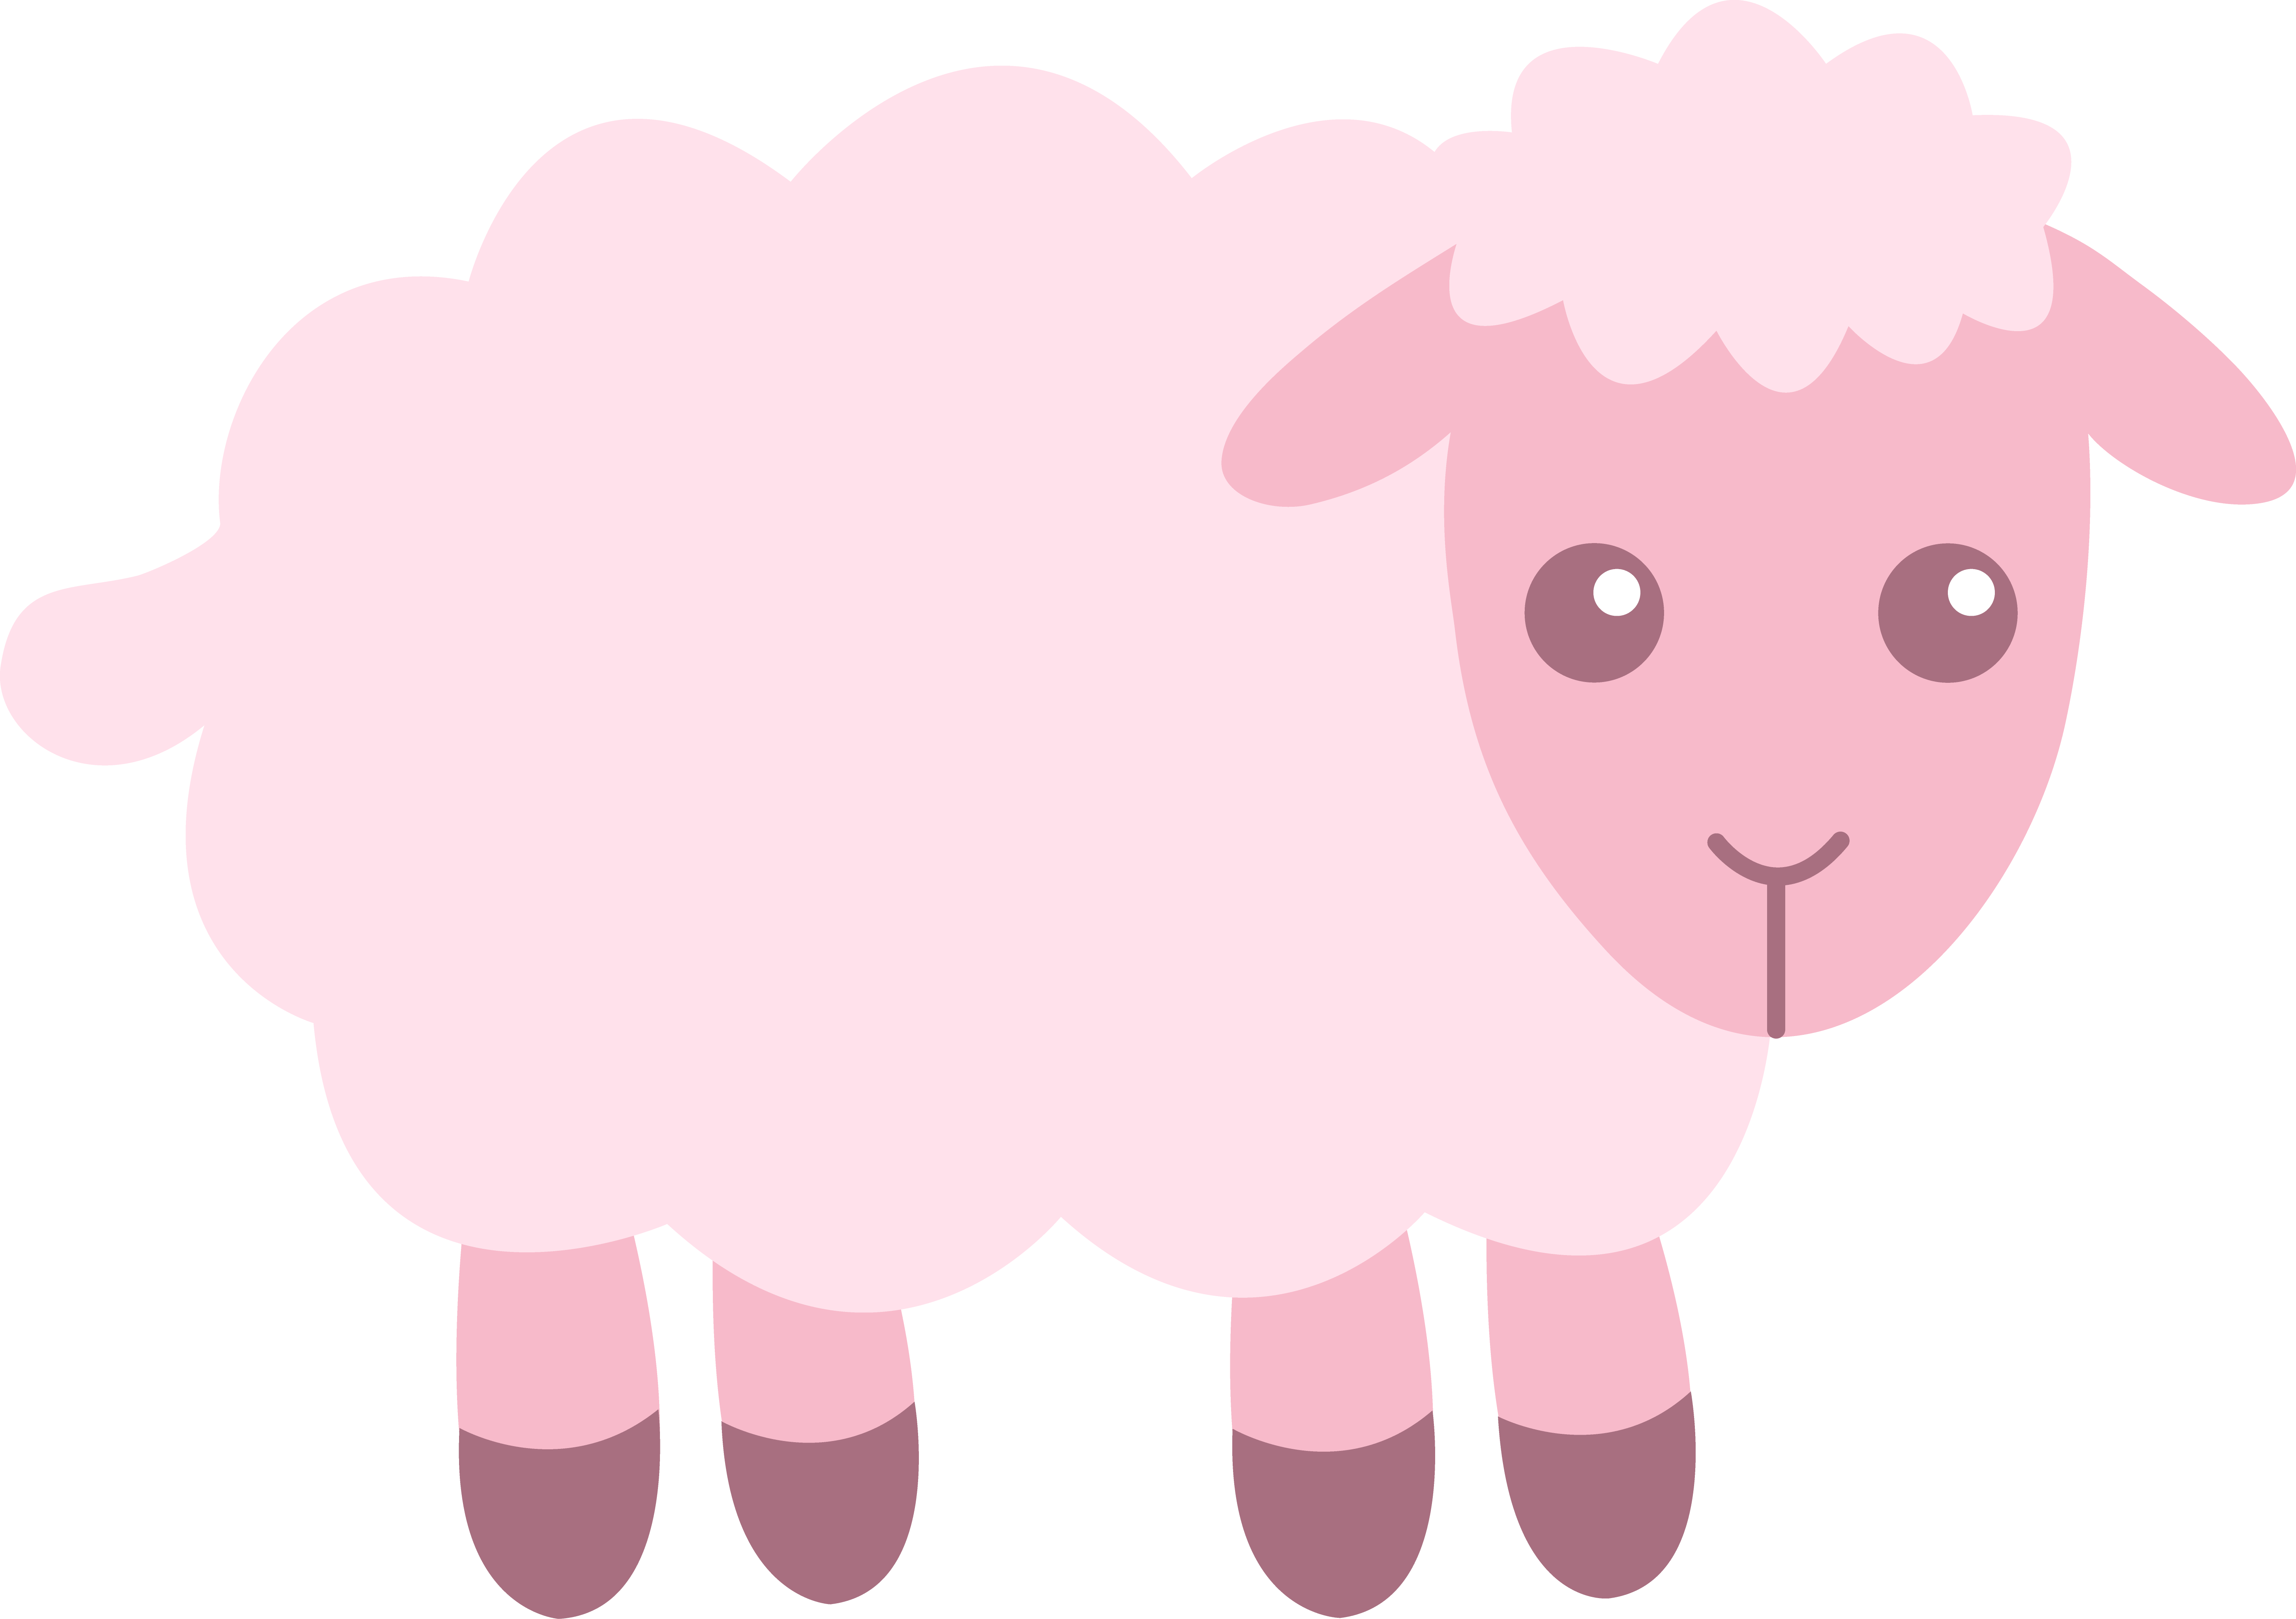 Cute pink sheep.